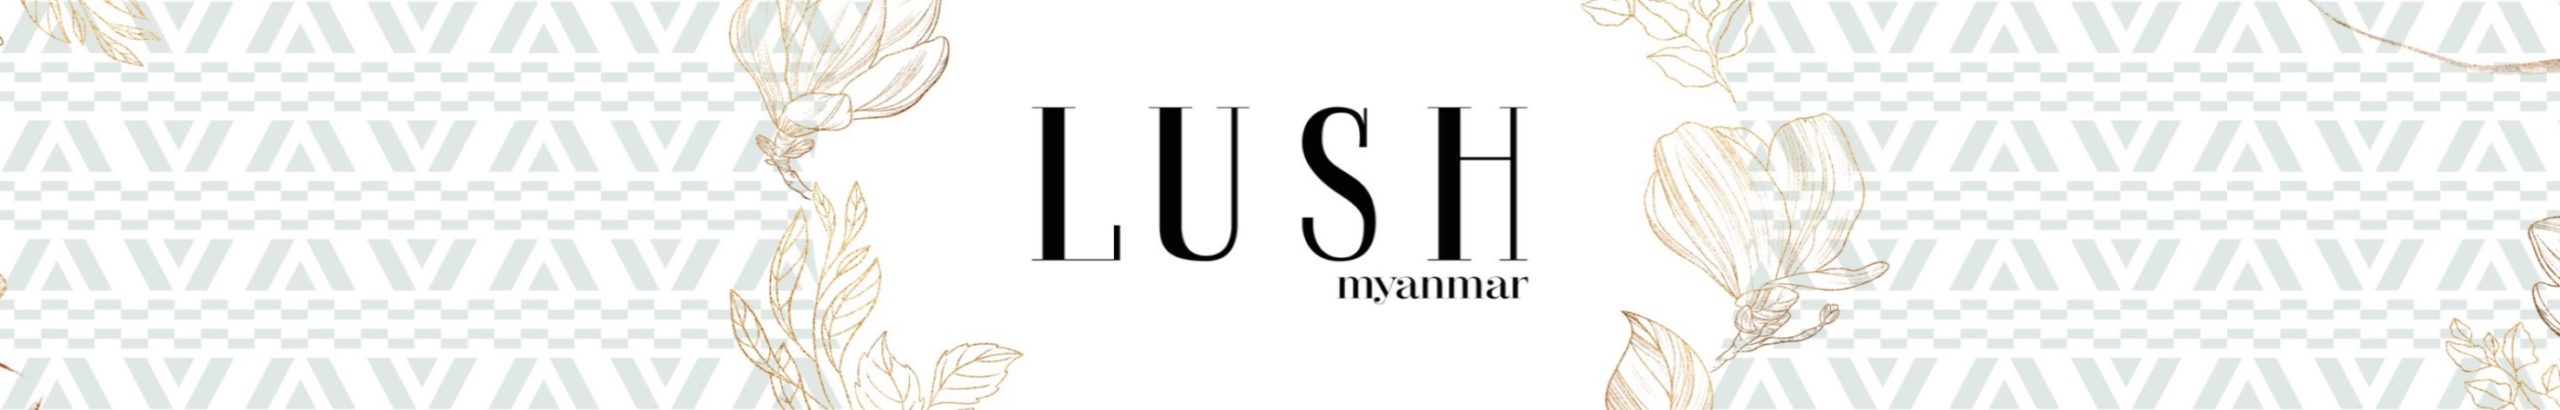 LUSH Magazine Myanmar